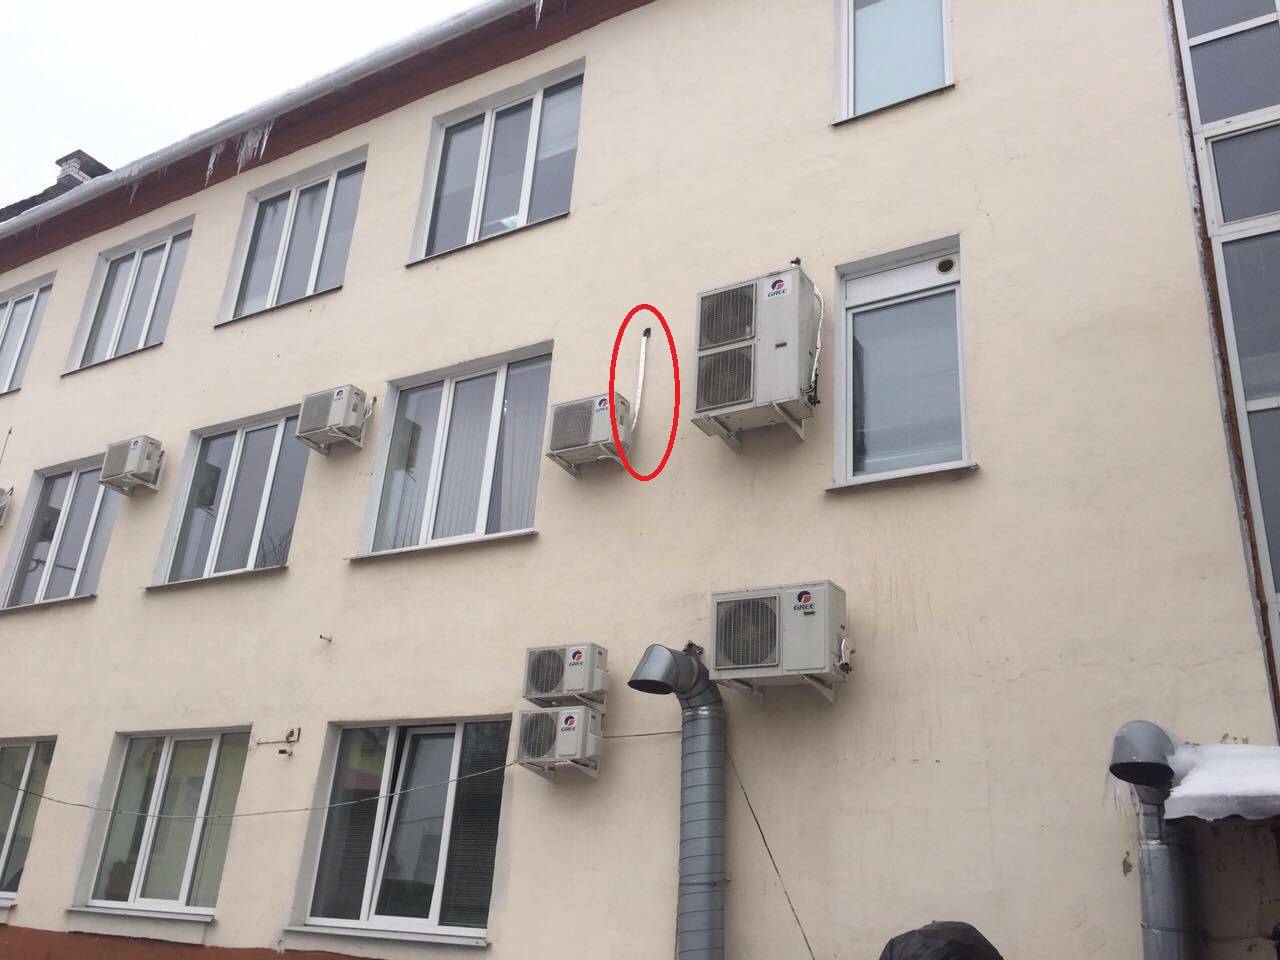 Правила установки кондиционера на фасад многоквартирного дома